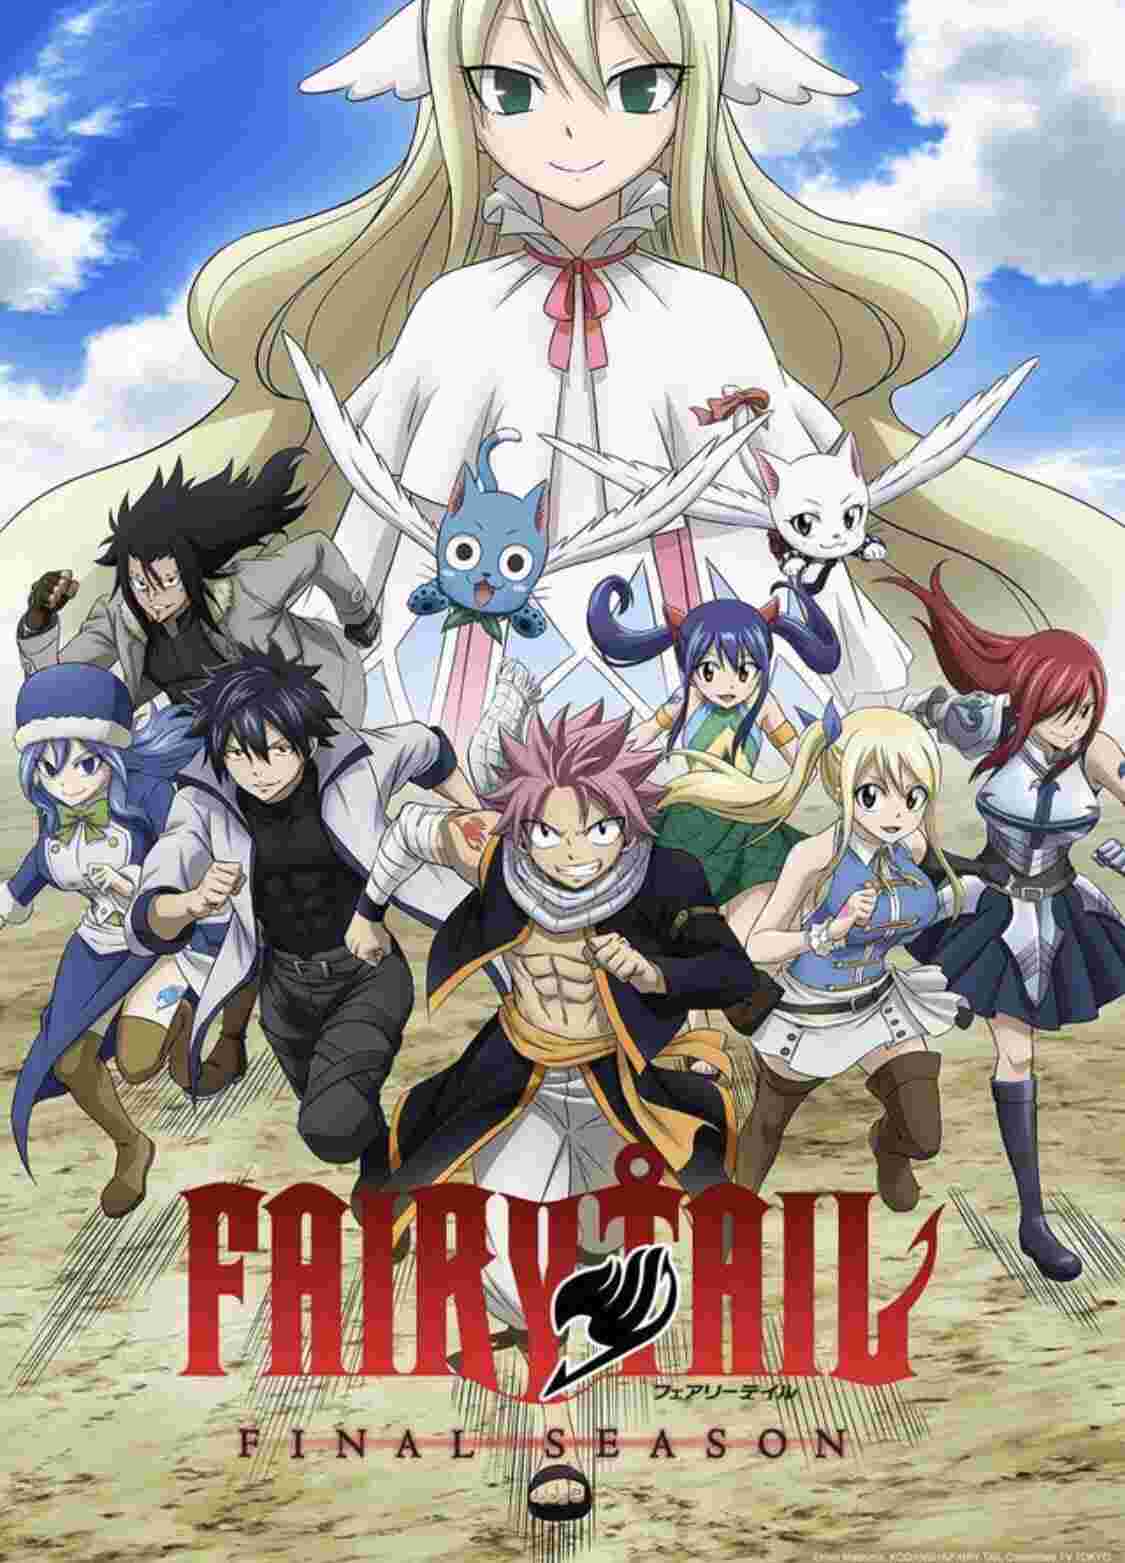 Fairy Tail: Final Series